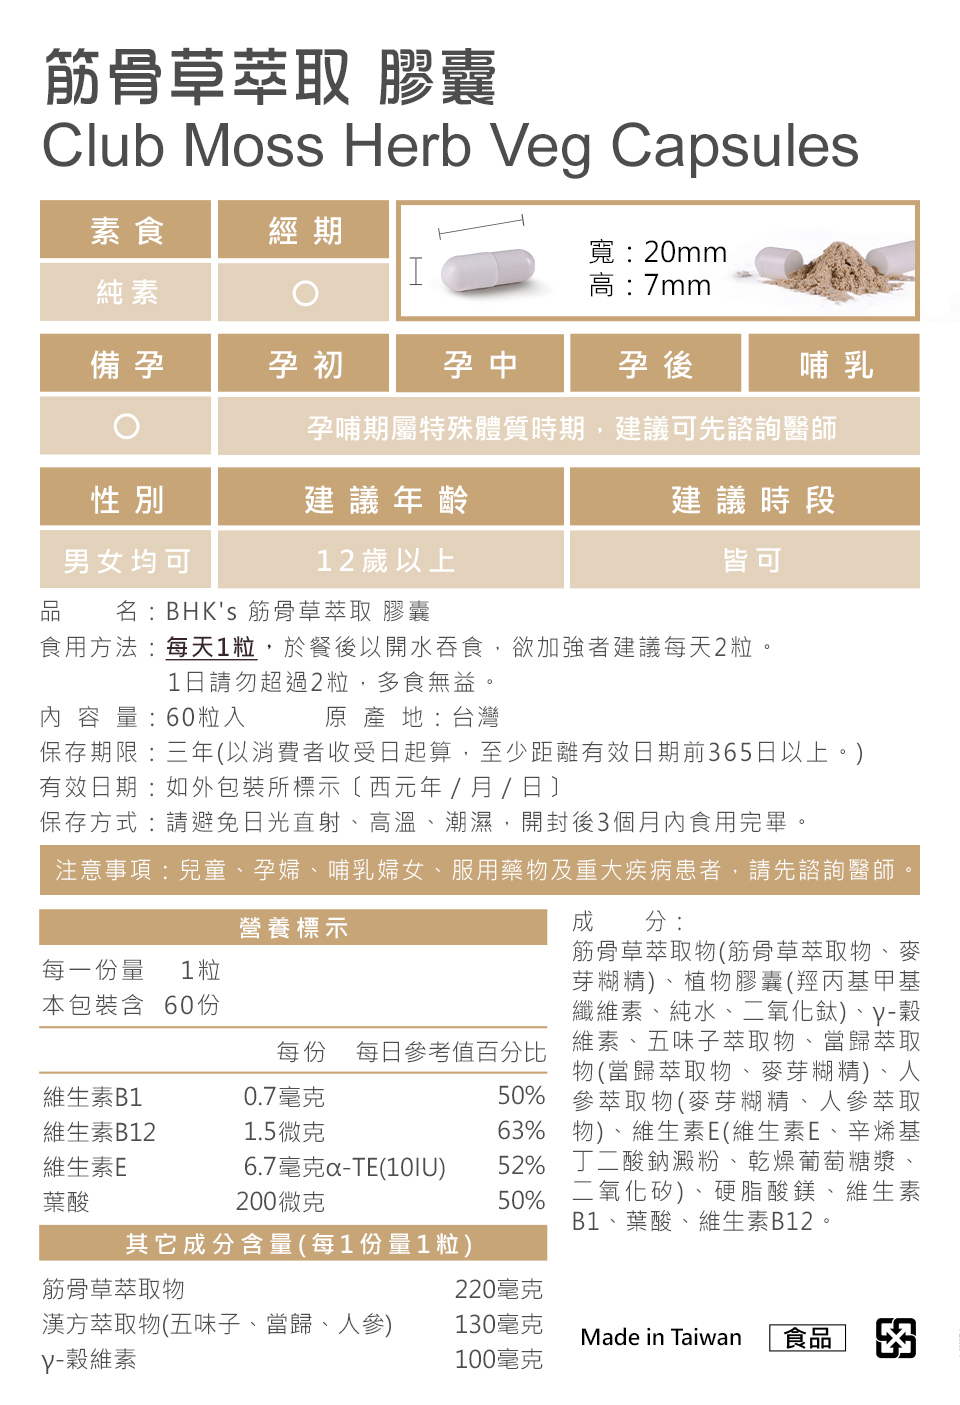 BHK筋骨草萃取，产品皆经安全检验合格，台湾生产制造，请安心食用。